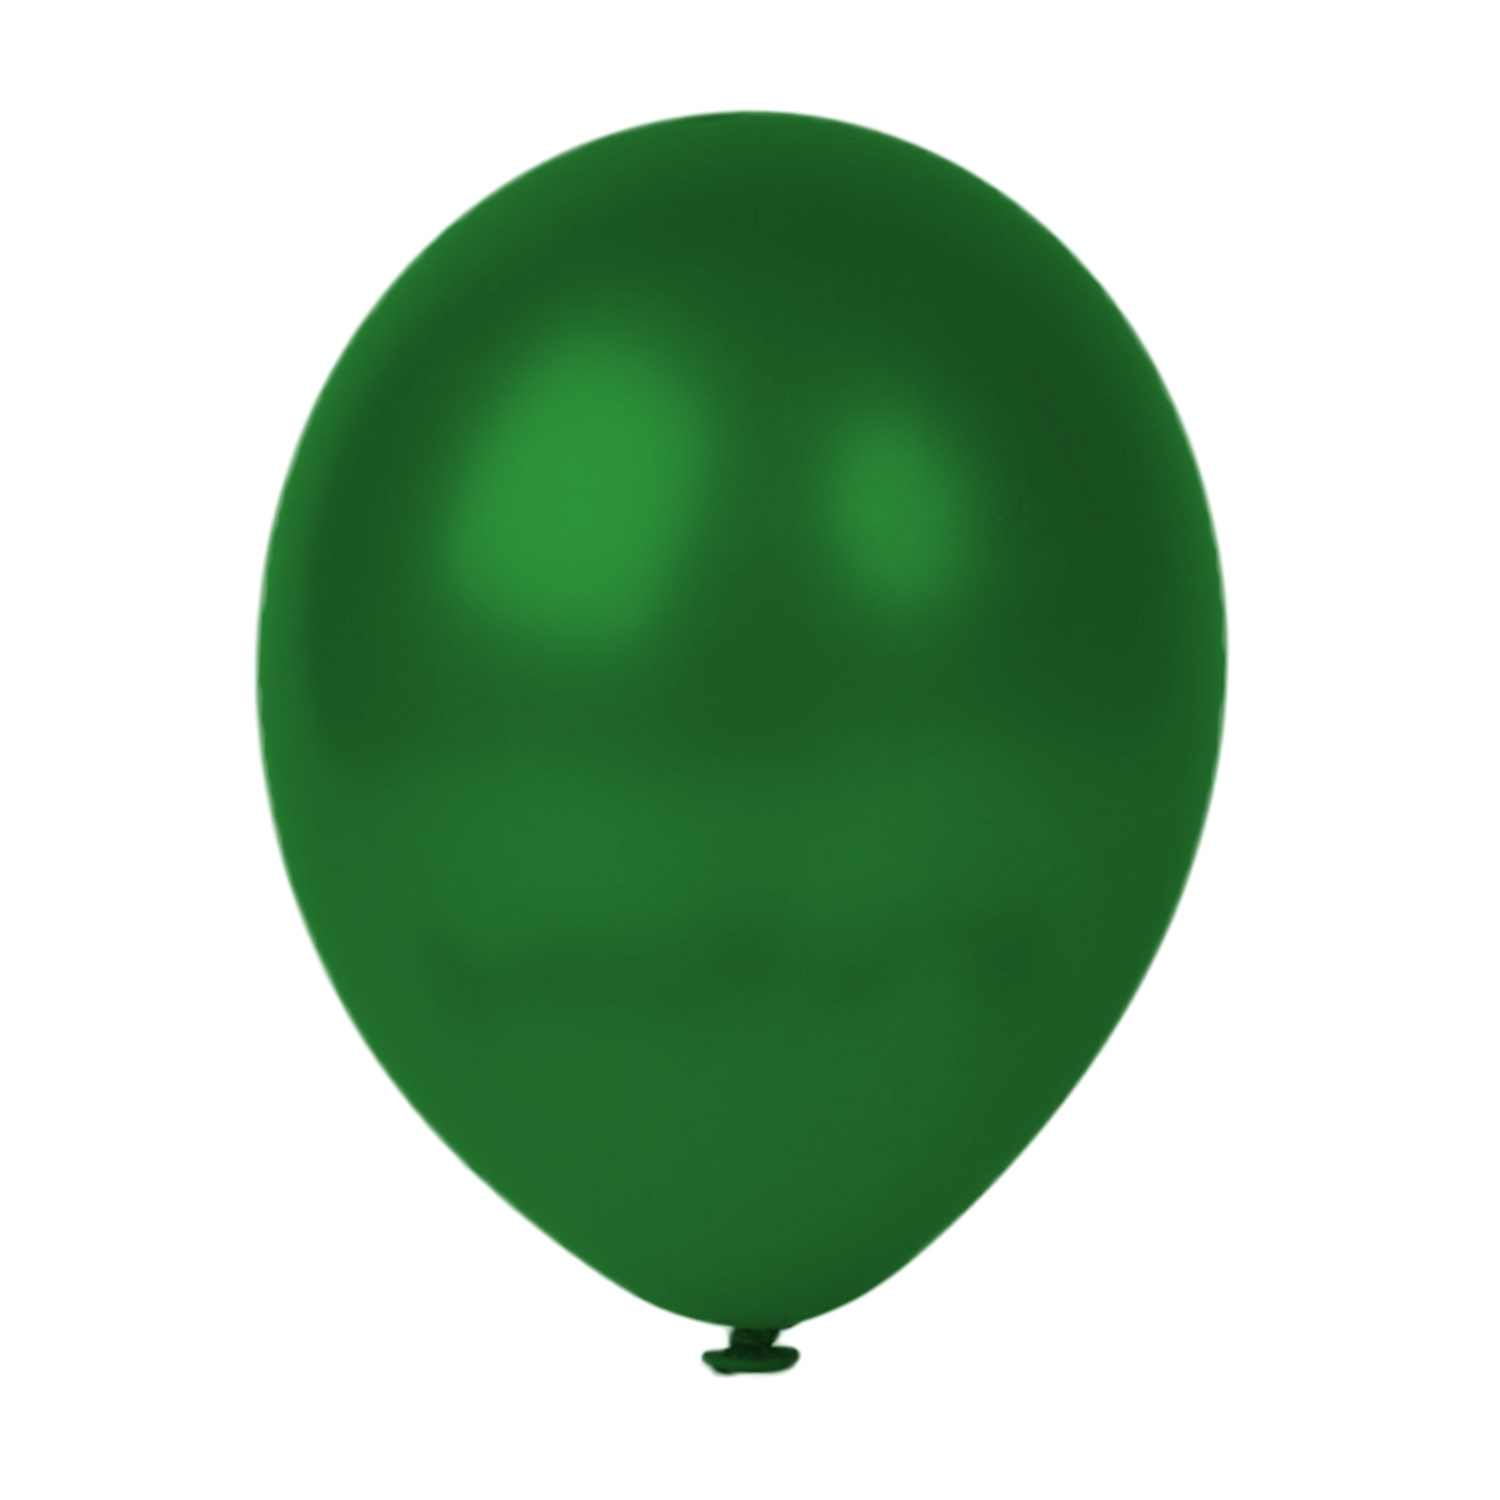 100er SET - Latex Luftballon - 12inch - Grün - Metallic (glänzend)